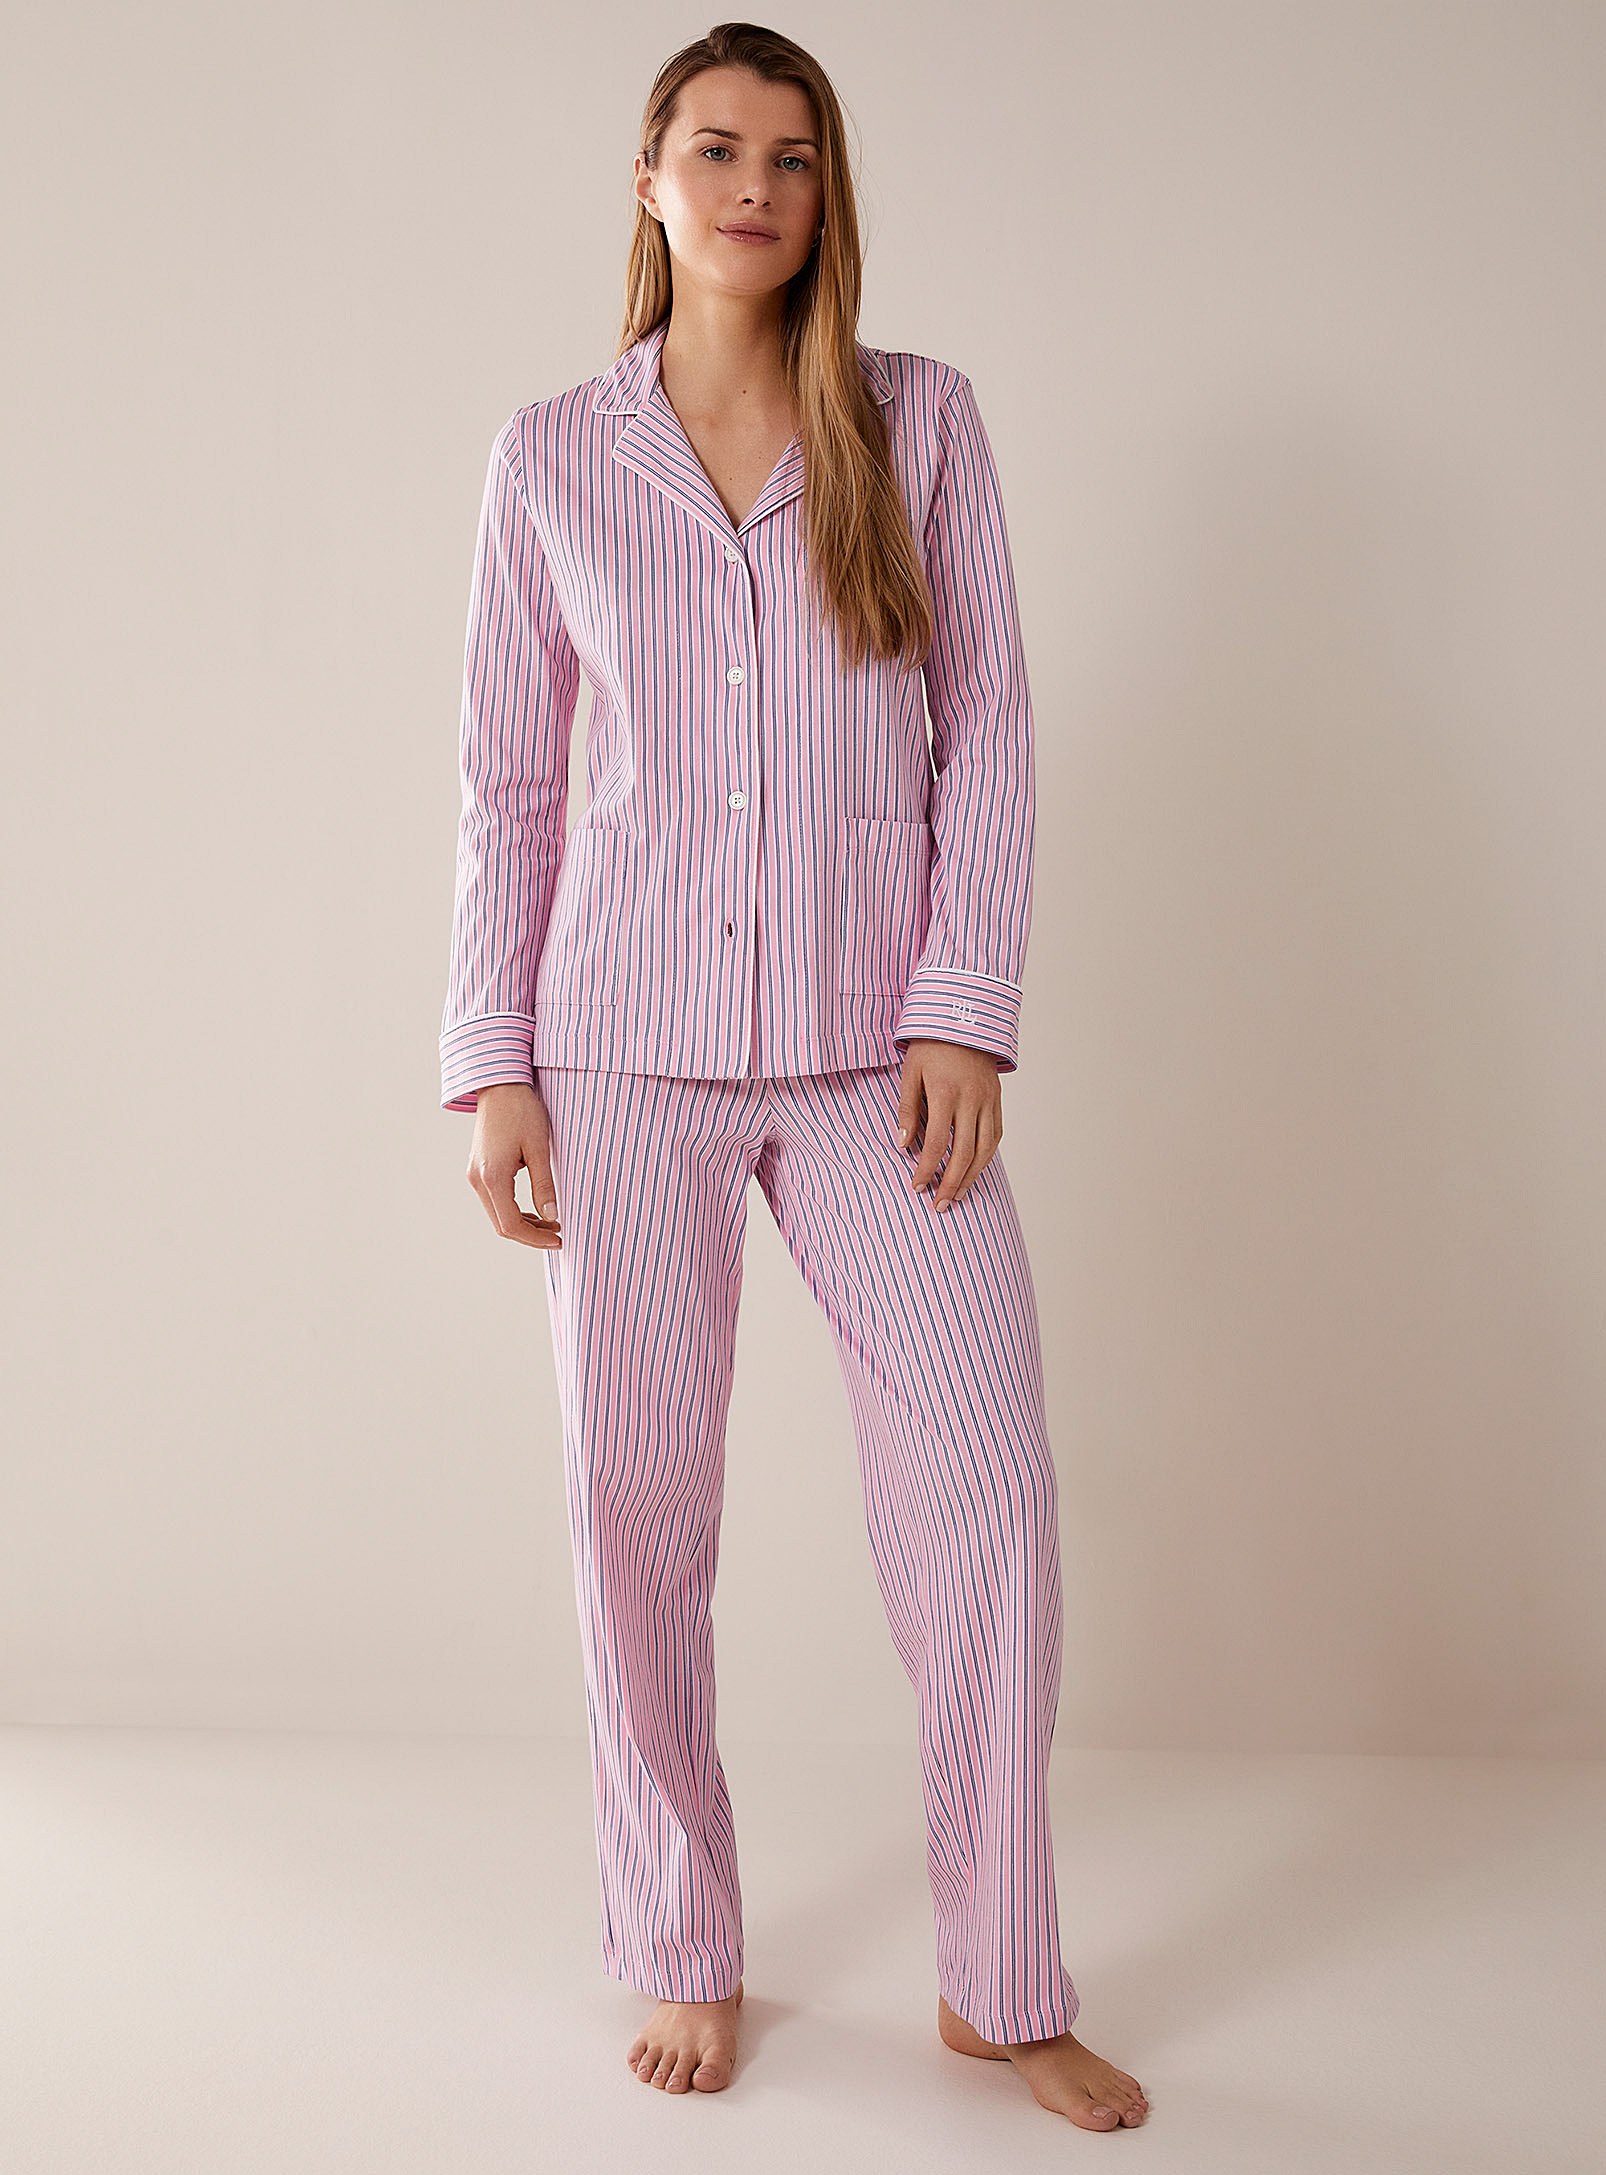 Lauren Par Ralph Lauren Pink And Blue Striped Pyjama Set